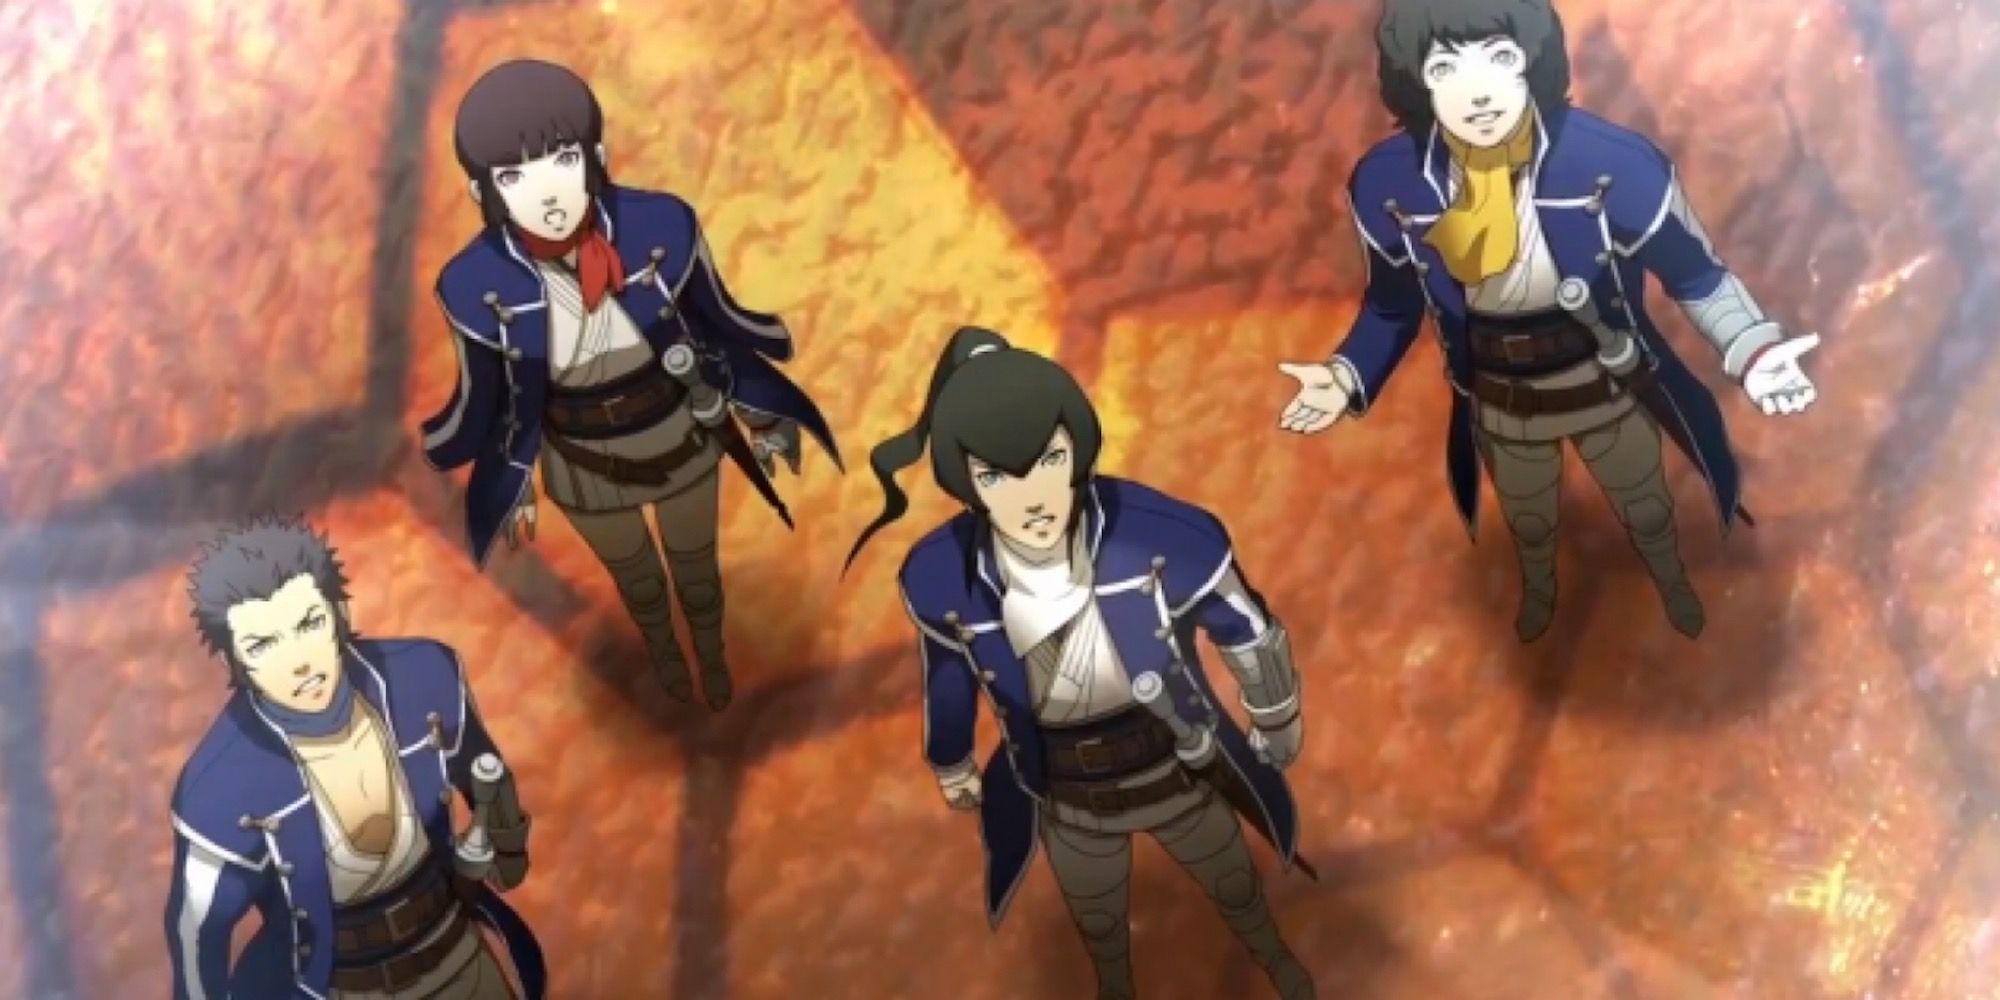 A cutscene featuring characters in Shin Megami Tensei 4